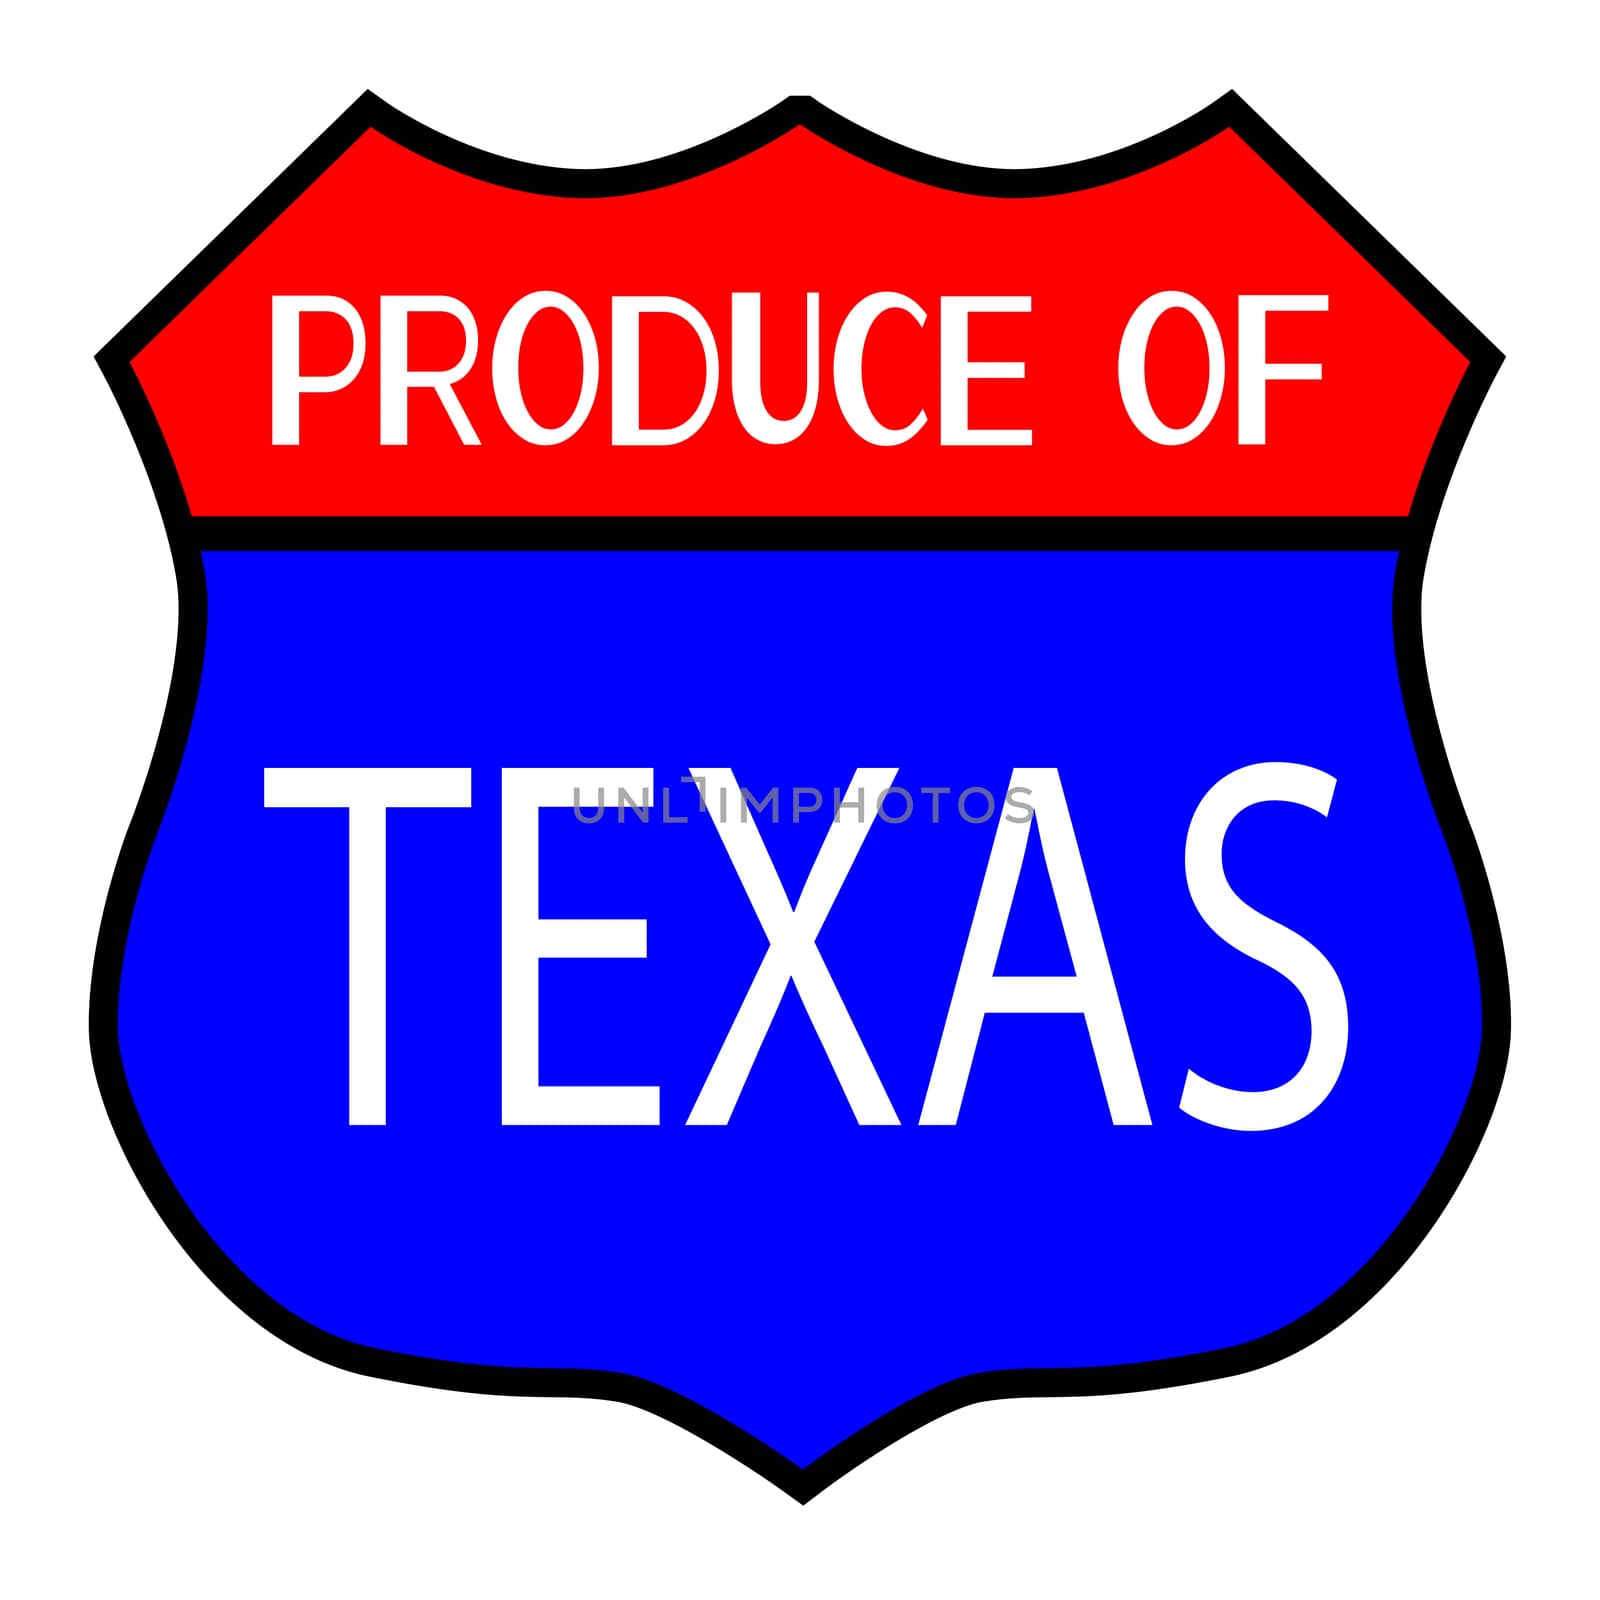 Produce Of Texas by Bigalbaloo